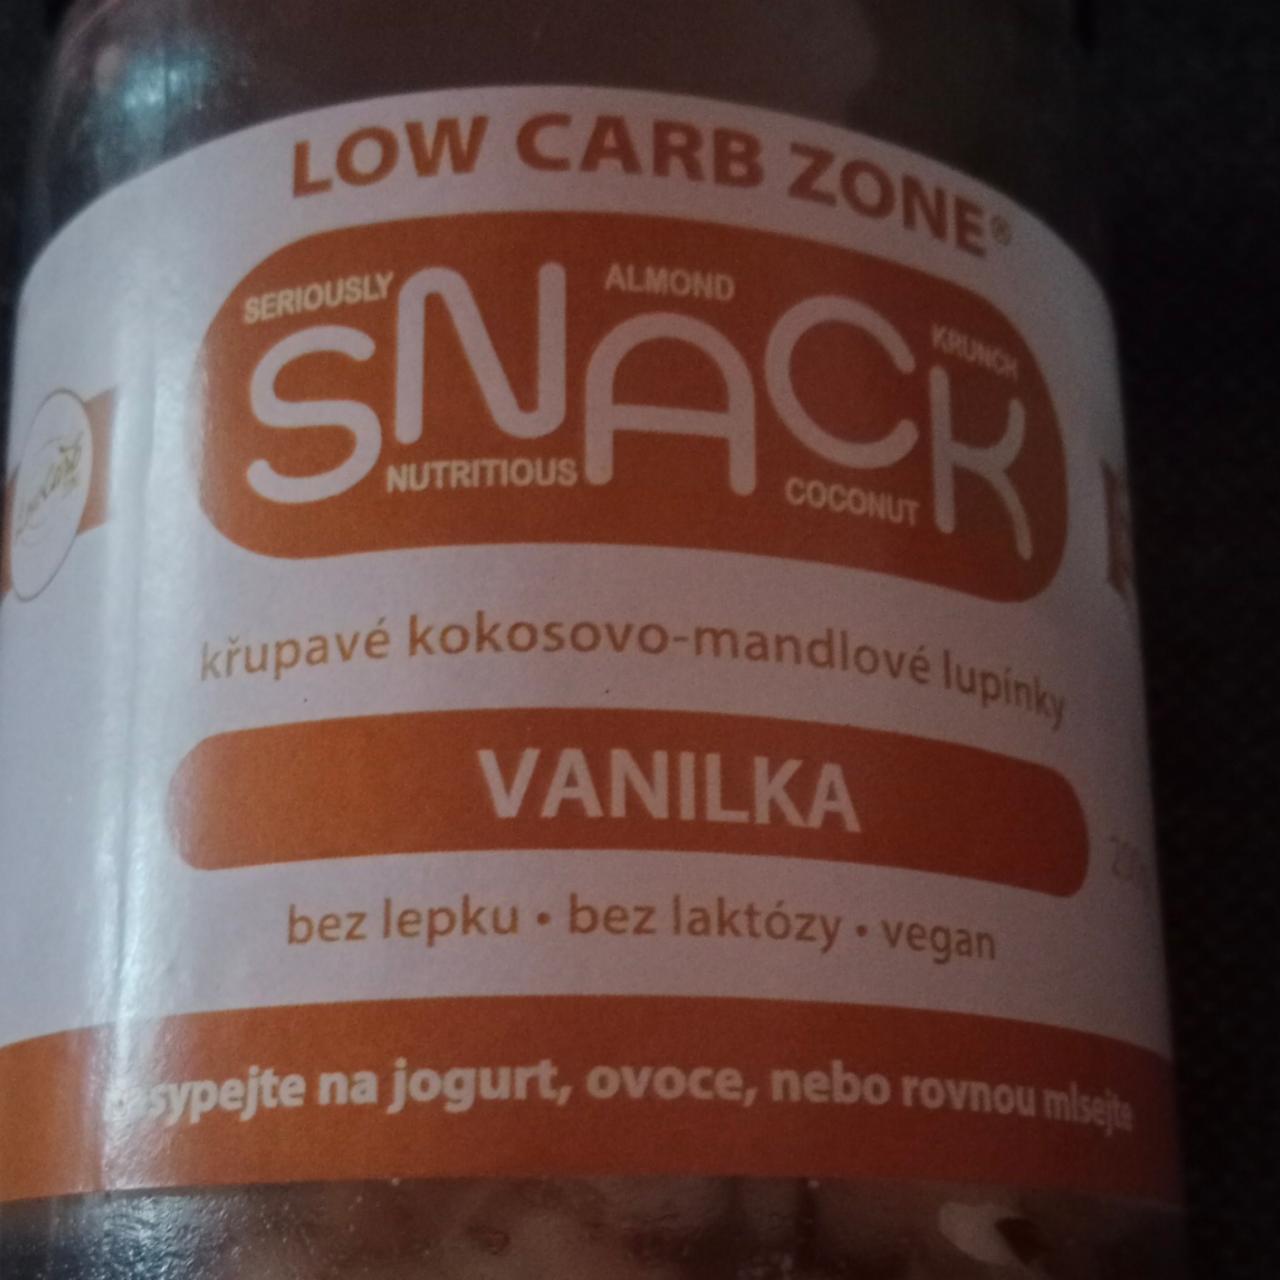 Fotografie - SNACK křupavé kokosovo-mandlové lupínky Vanilka Low Carb Zone